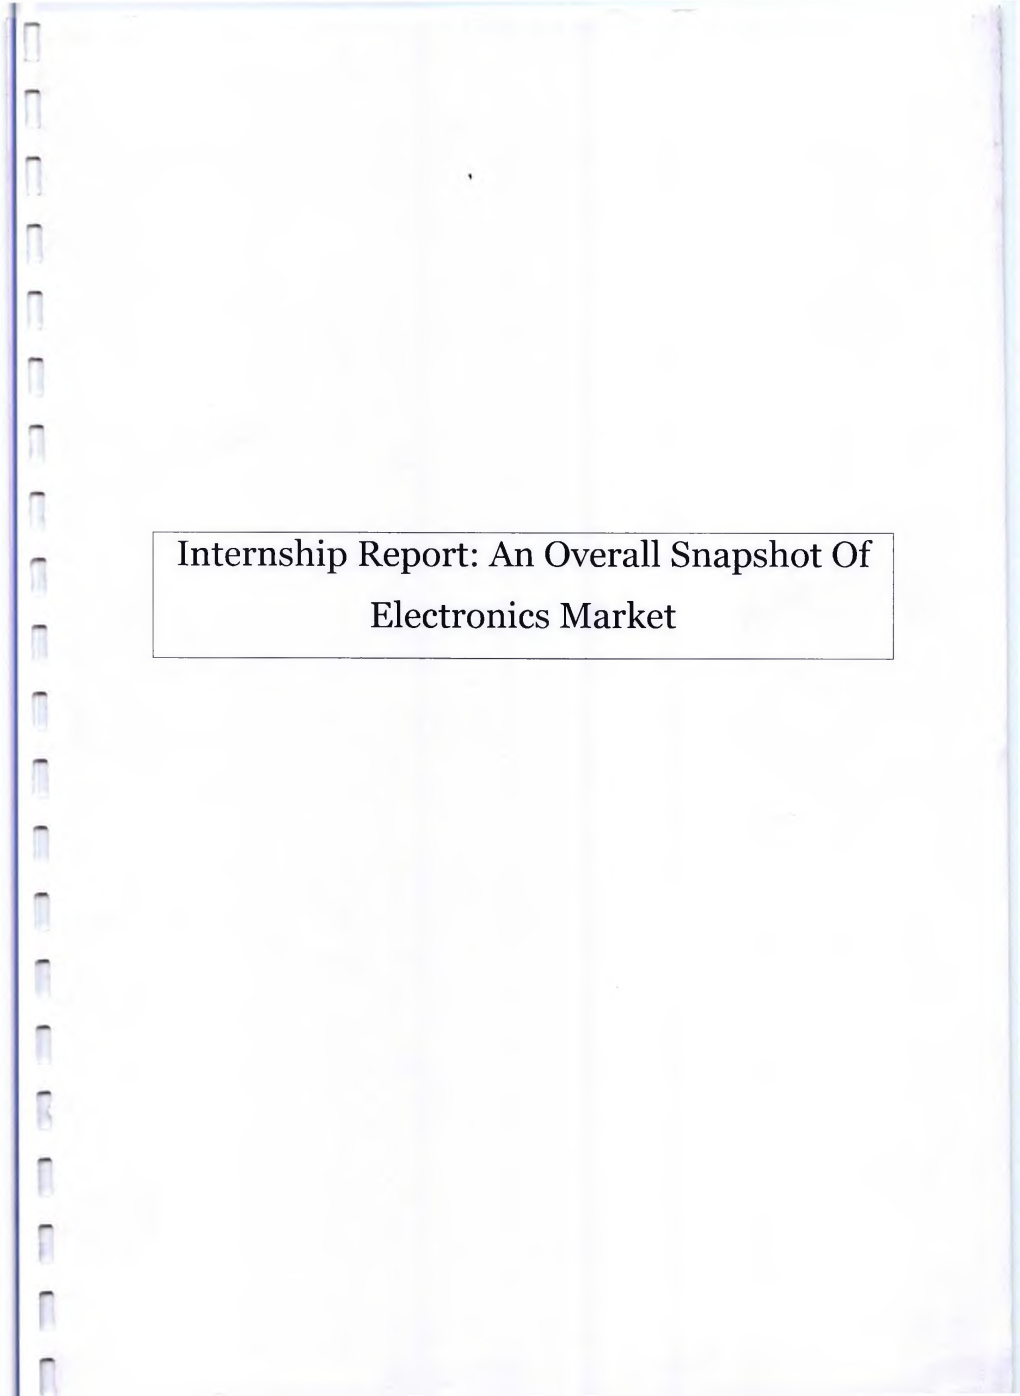 Internship Report: an Overall Snapshot of Electronics Market Internship Report: an Overall Snapshot of Electronics Market